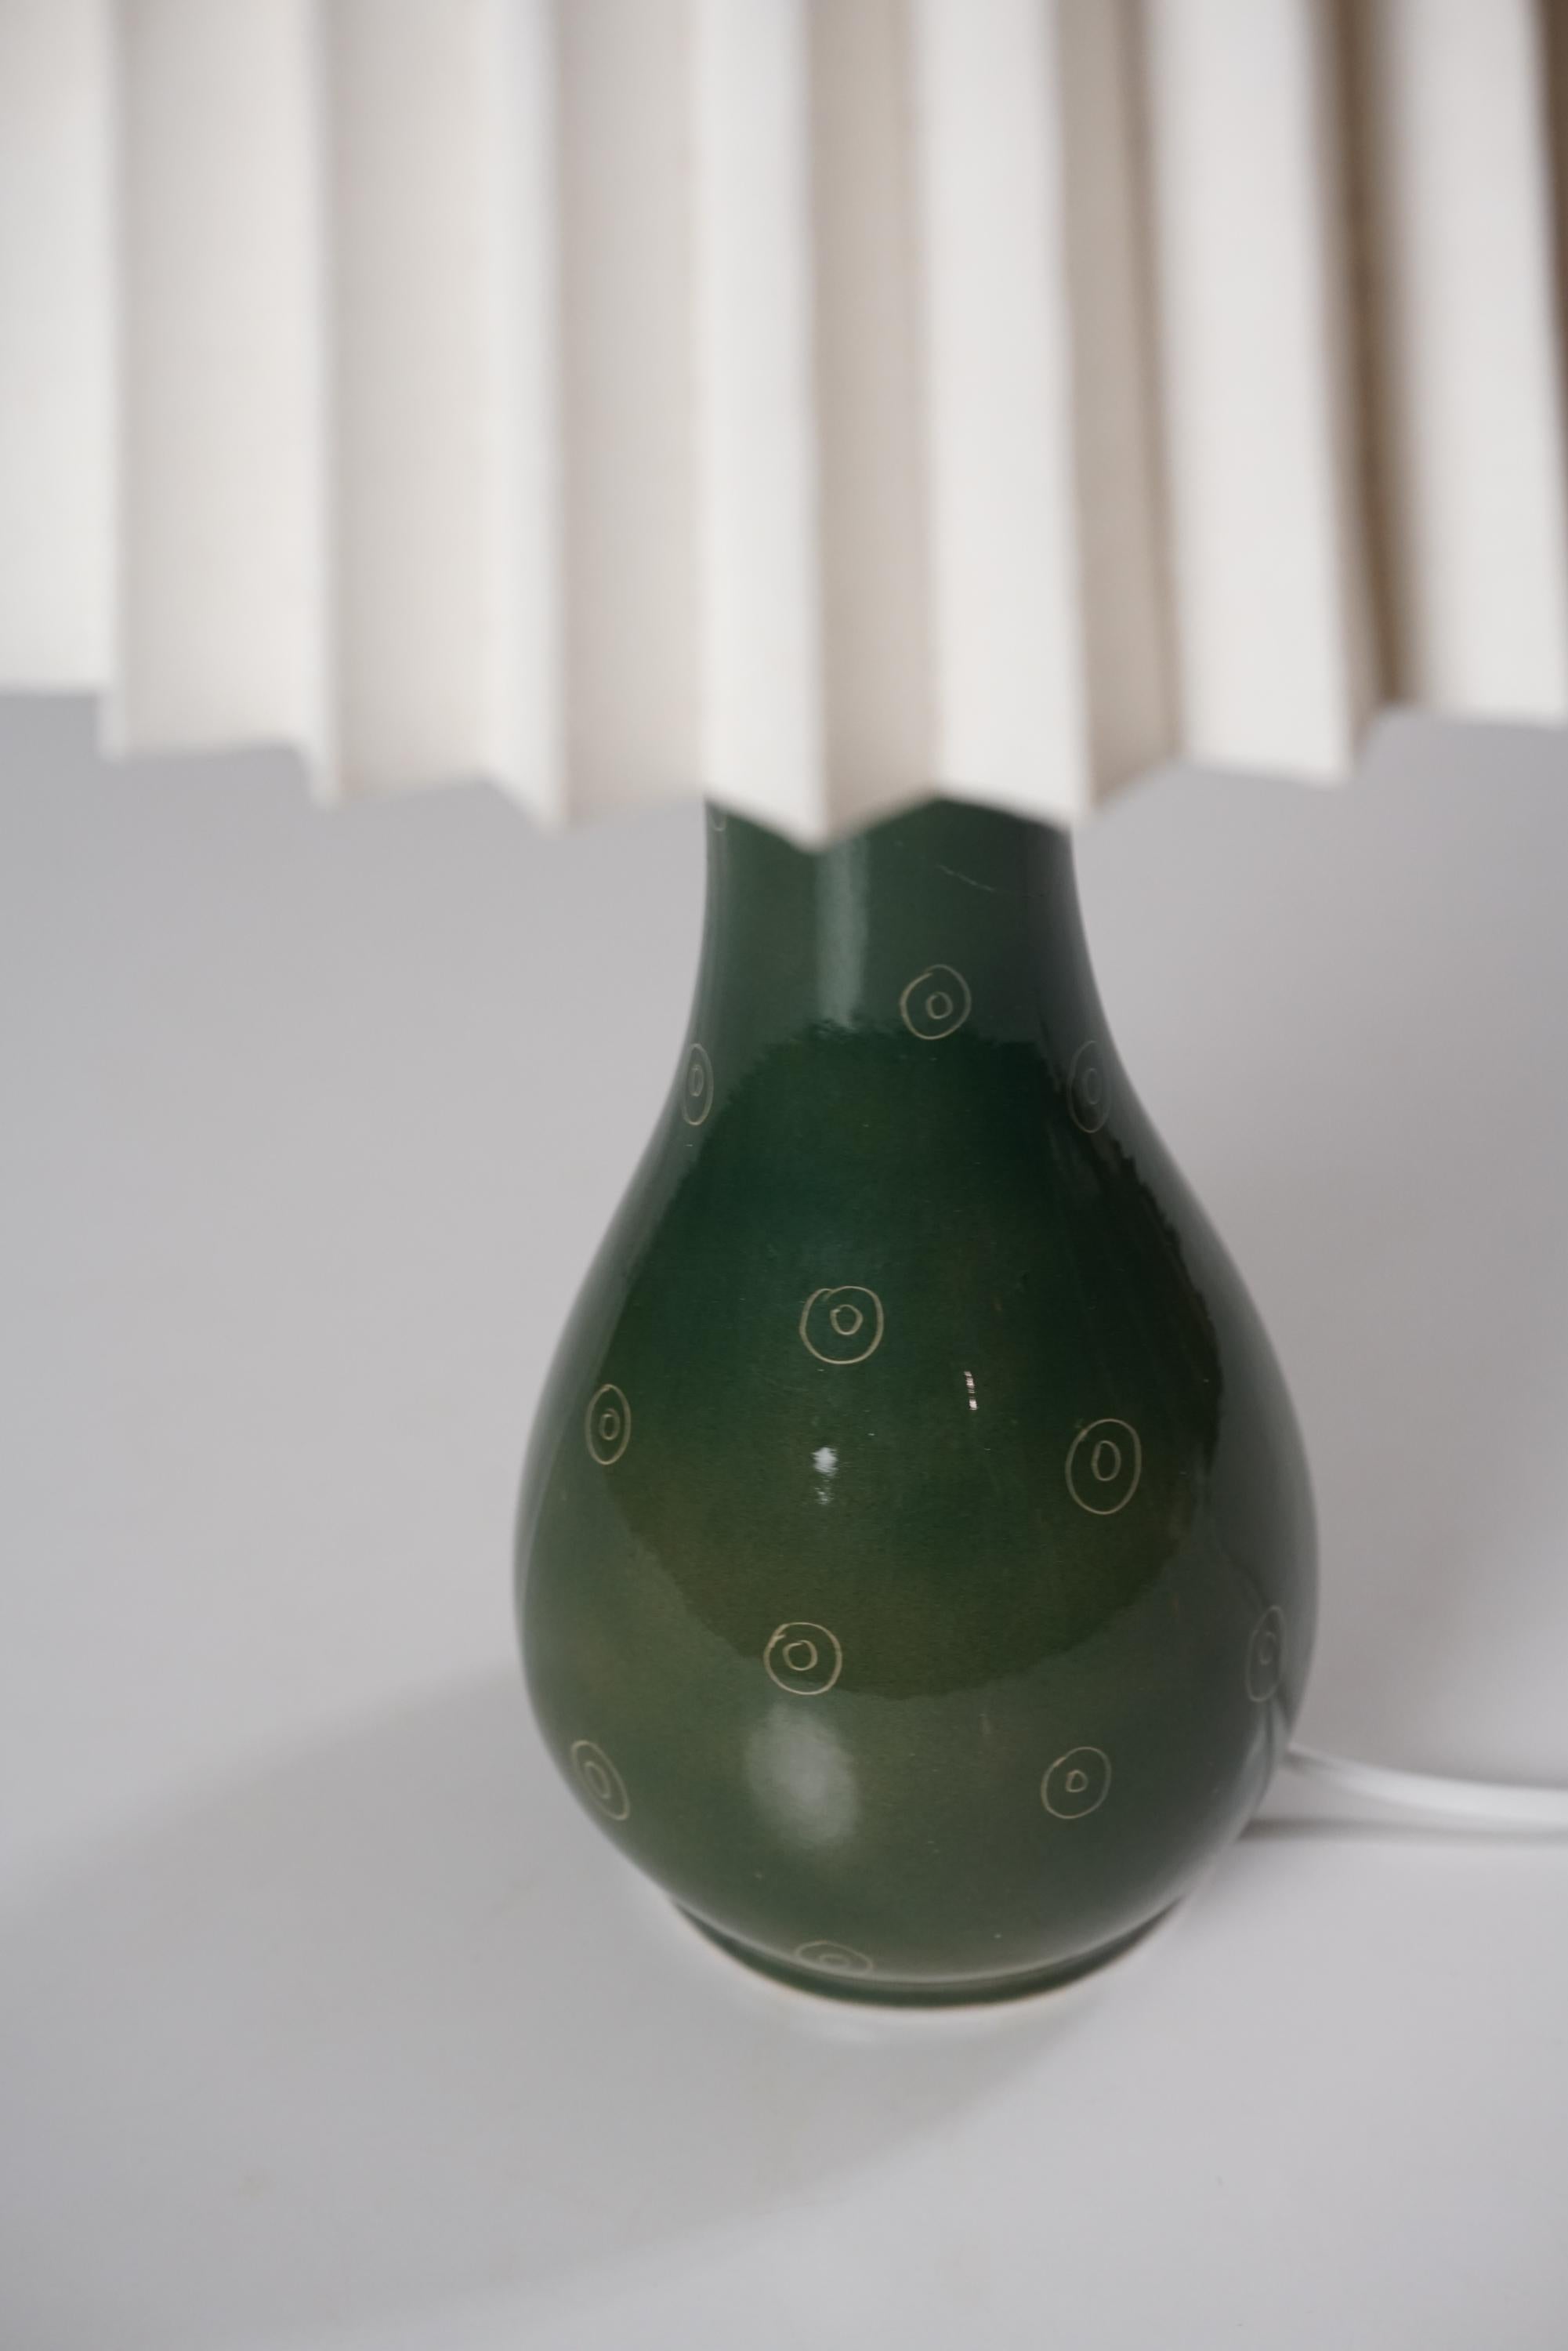 Glazed Toini Muona Ceramic Table Lamp, Arabia, 1950s For Sale